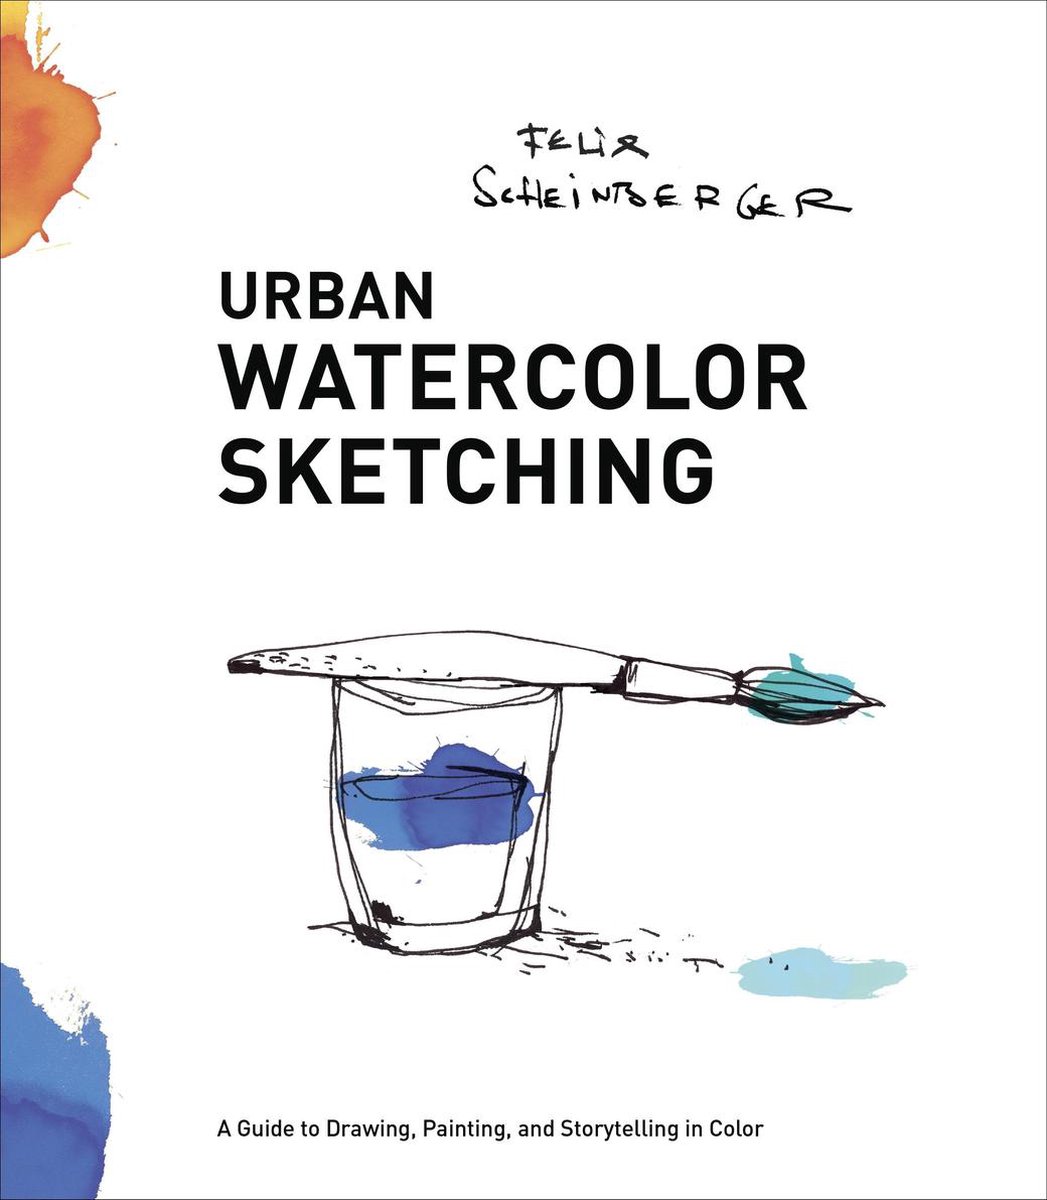 Urban Watercolor Sketching - Felix Scheinberger